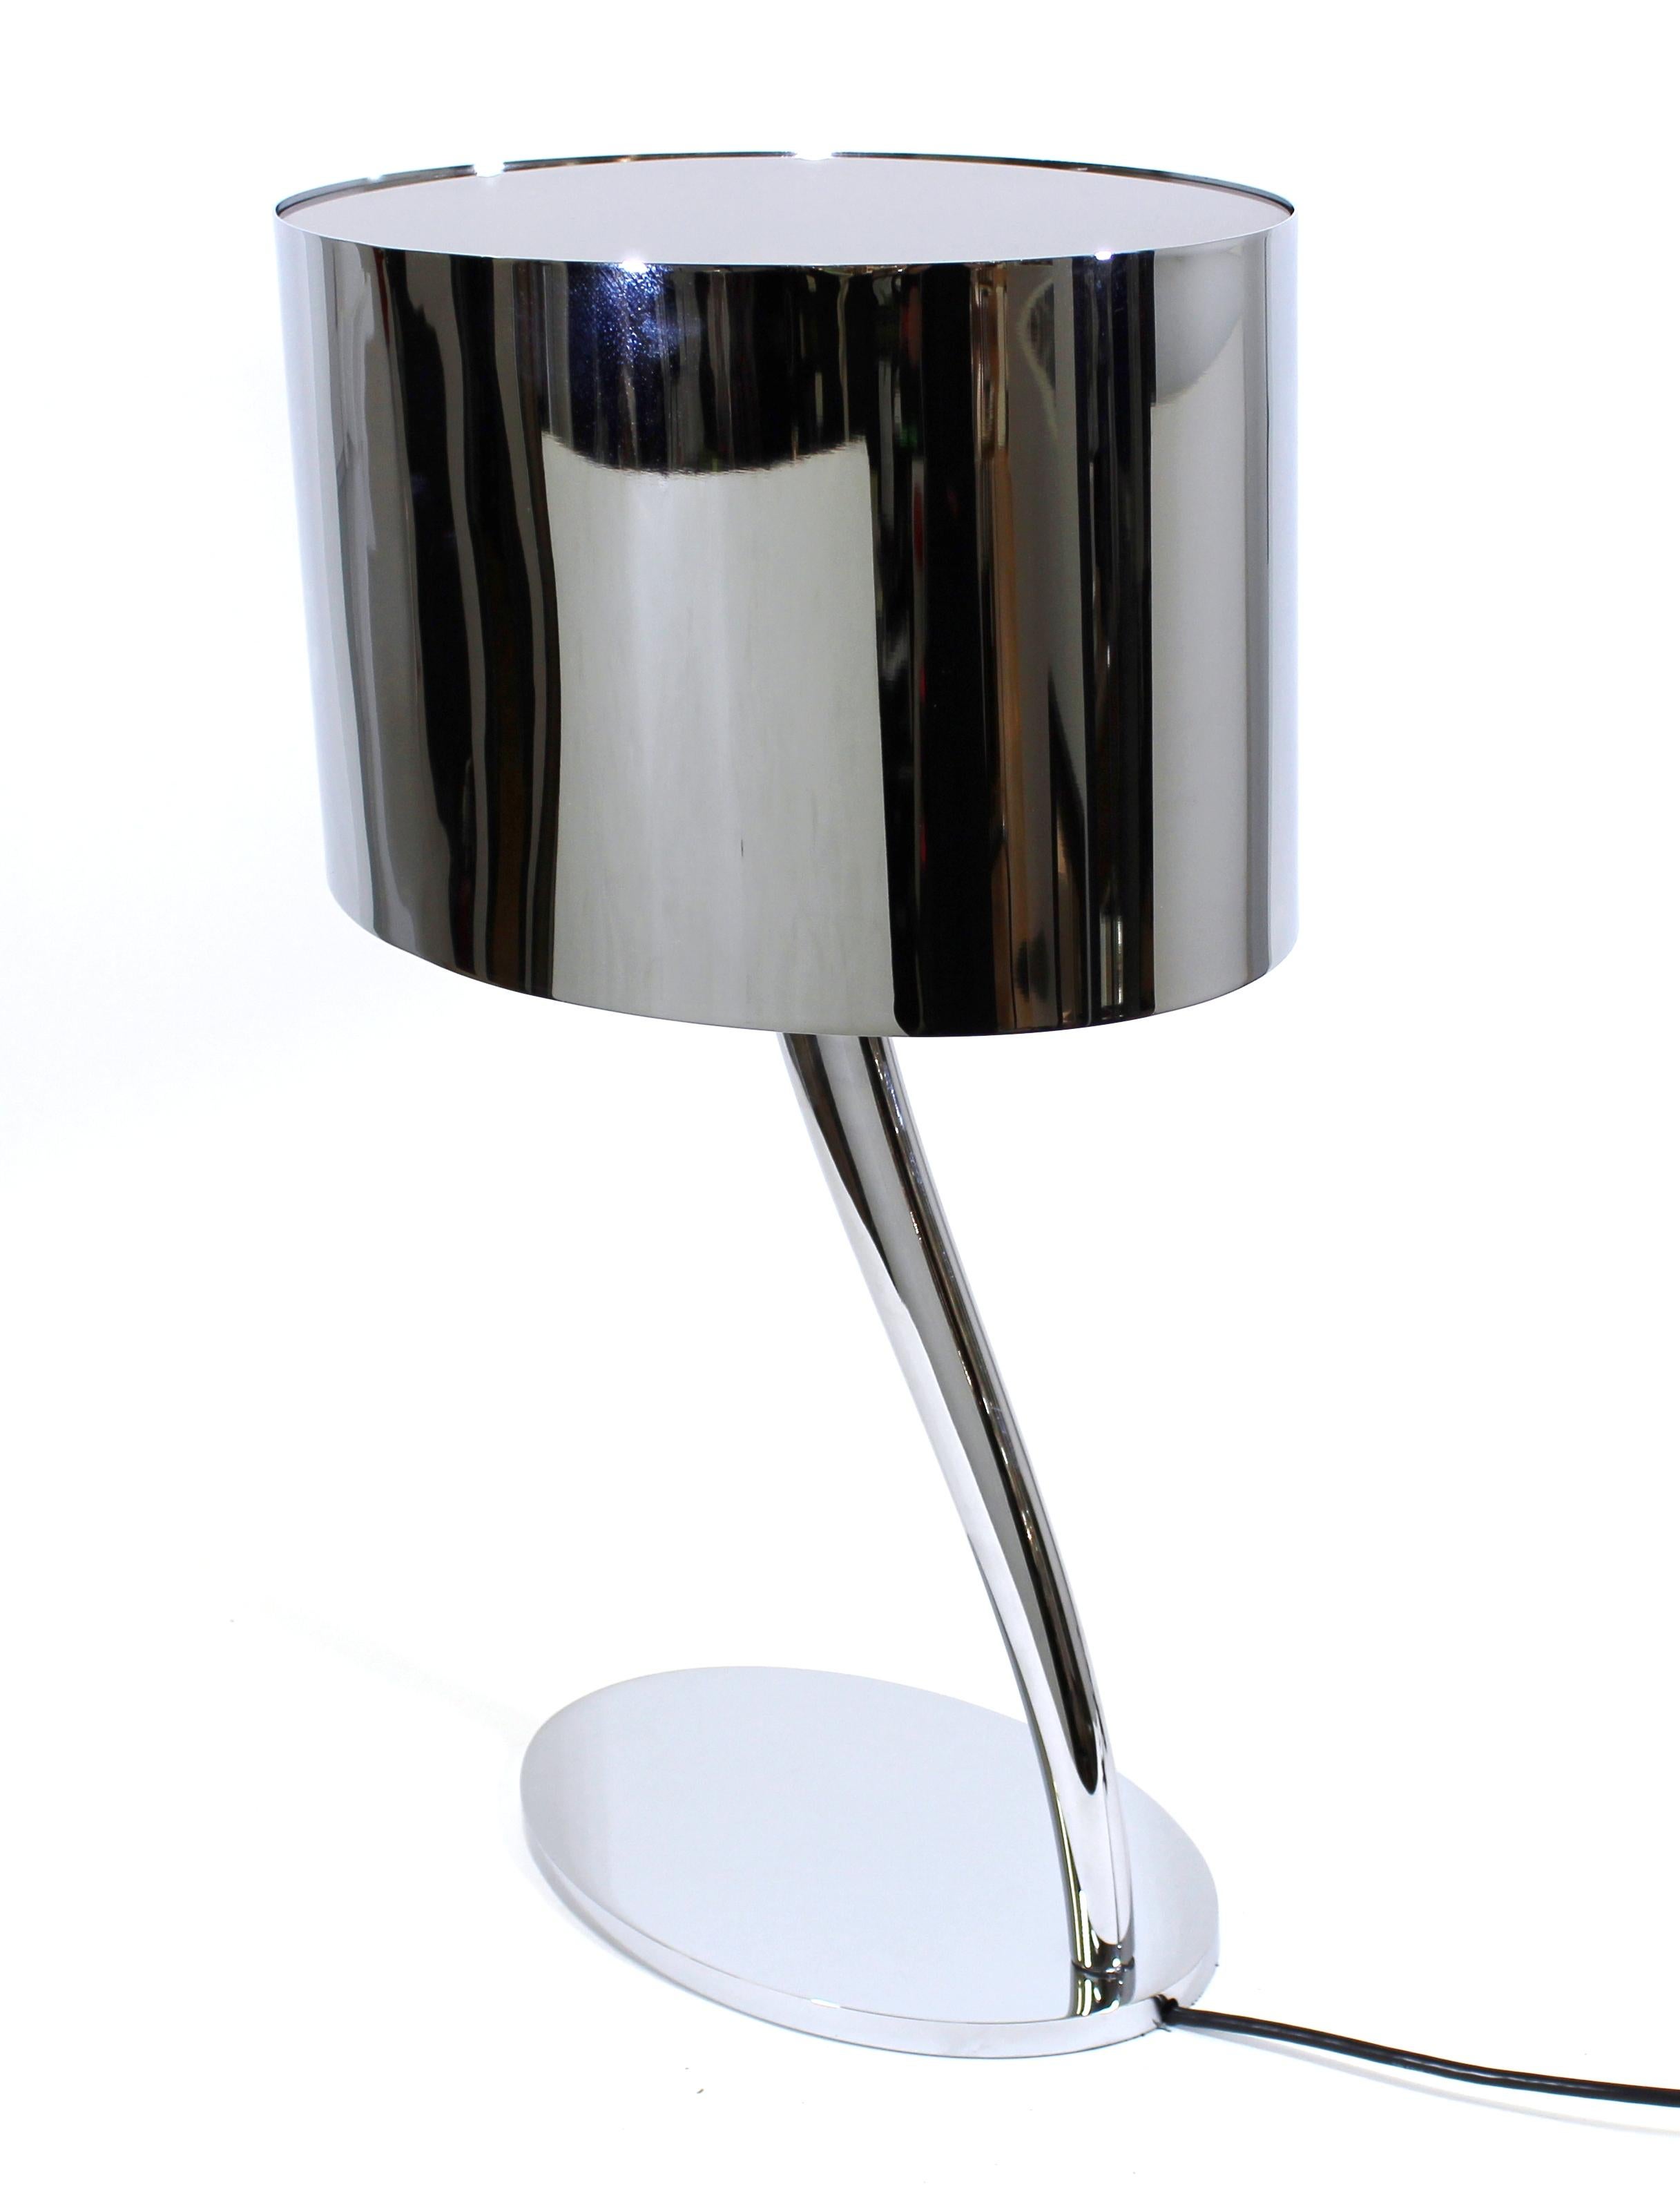 Fendi Casa Italian modern 'Cassiopeia' table lamp in chromed metal.